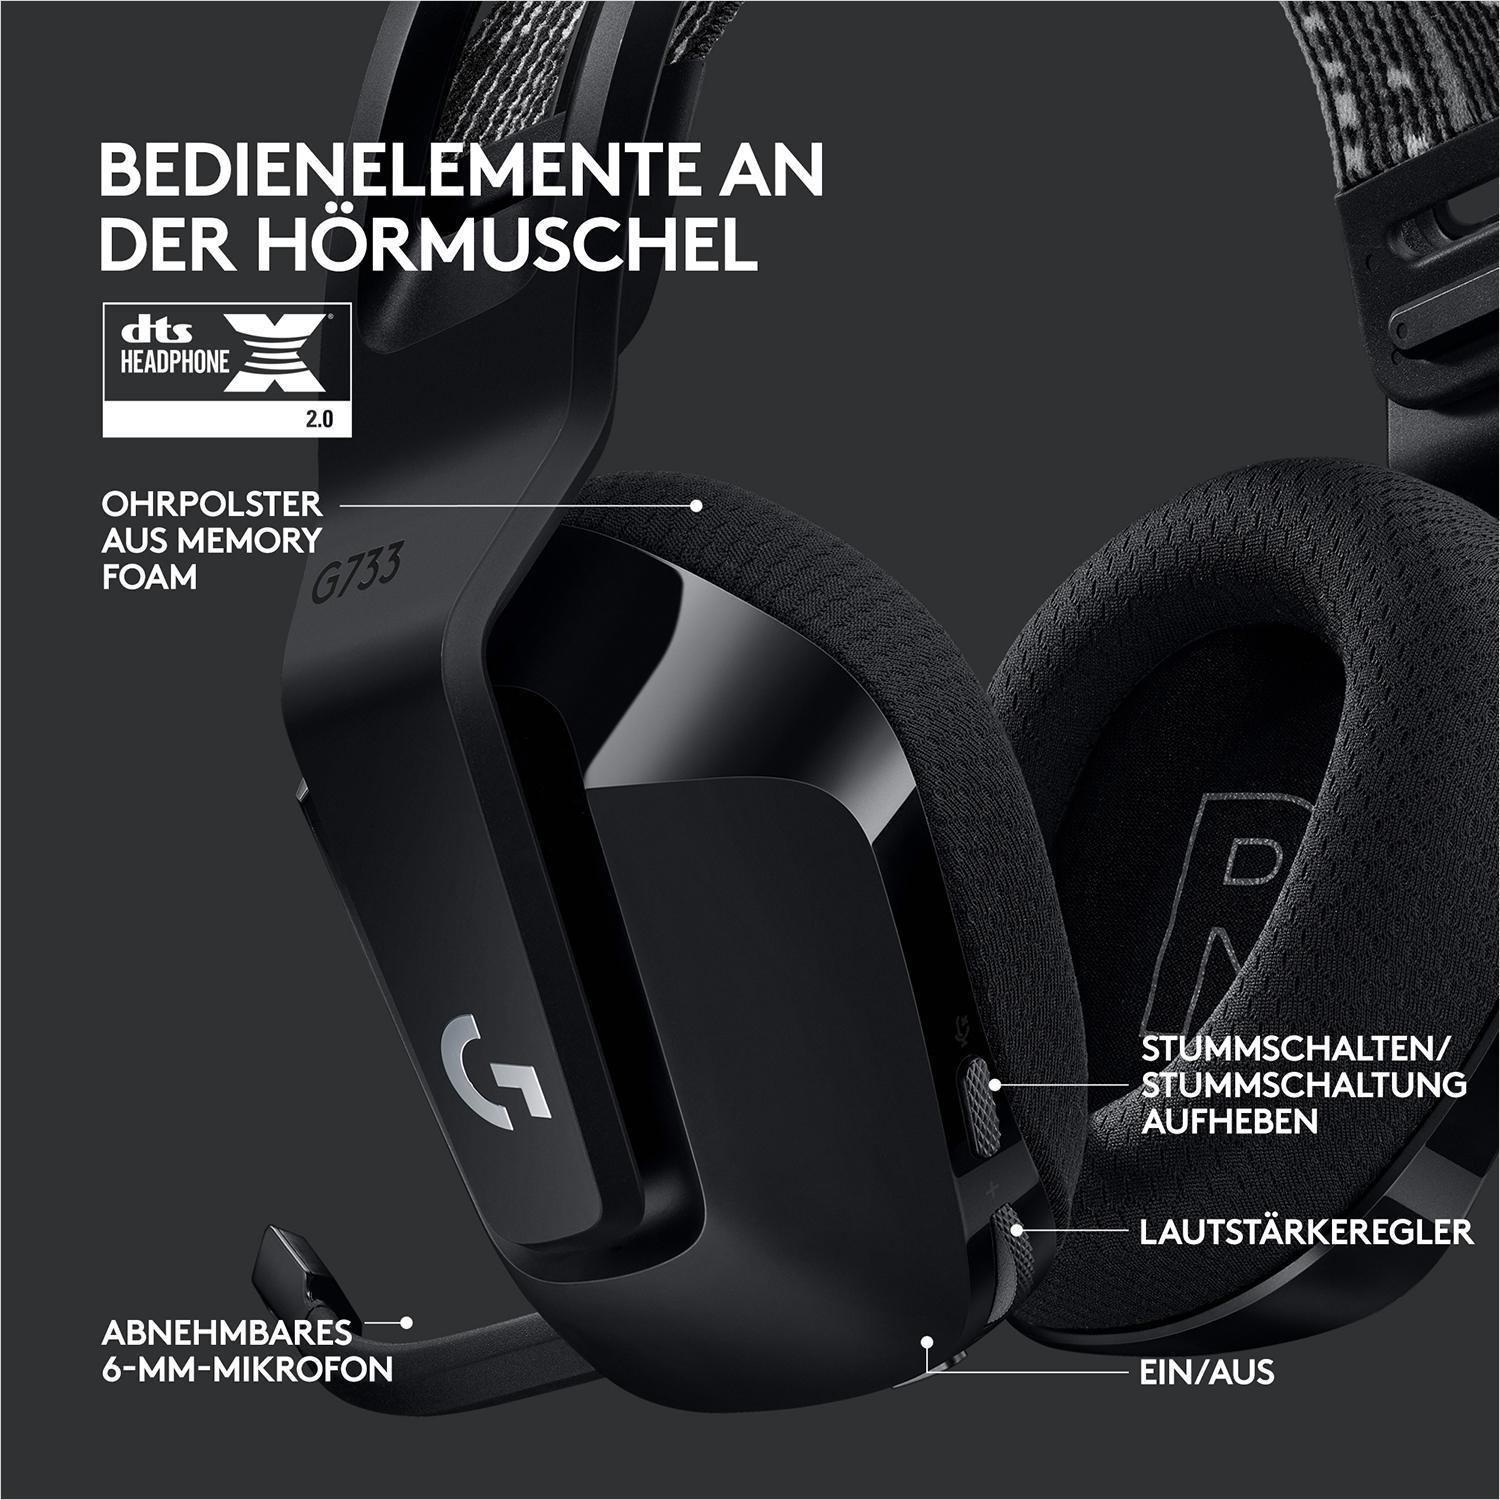 RGB Over-ear LOGITECH Gaming Headset LIGHTSYNC Speed kabelloses, Schwarz Light G733